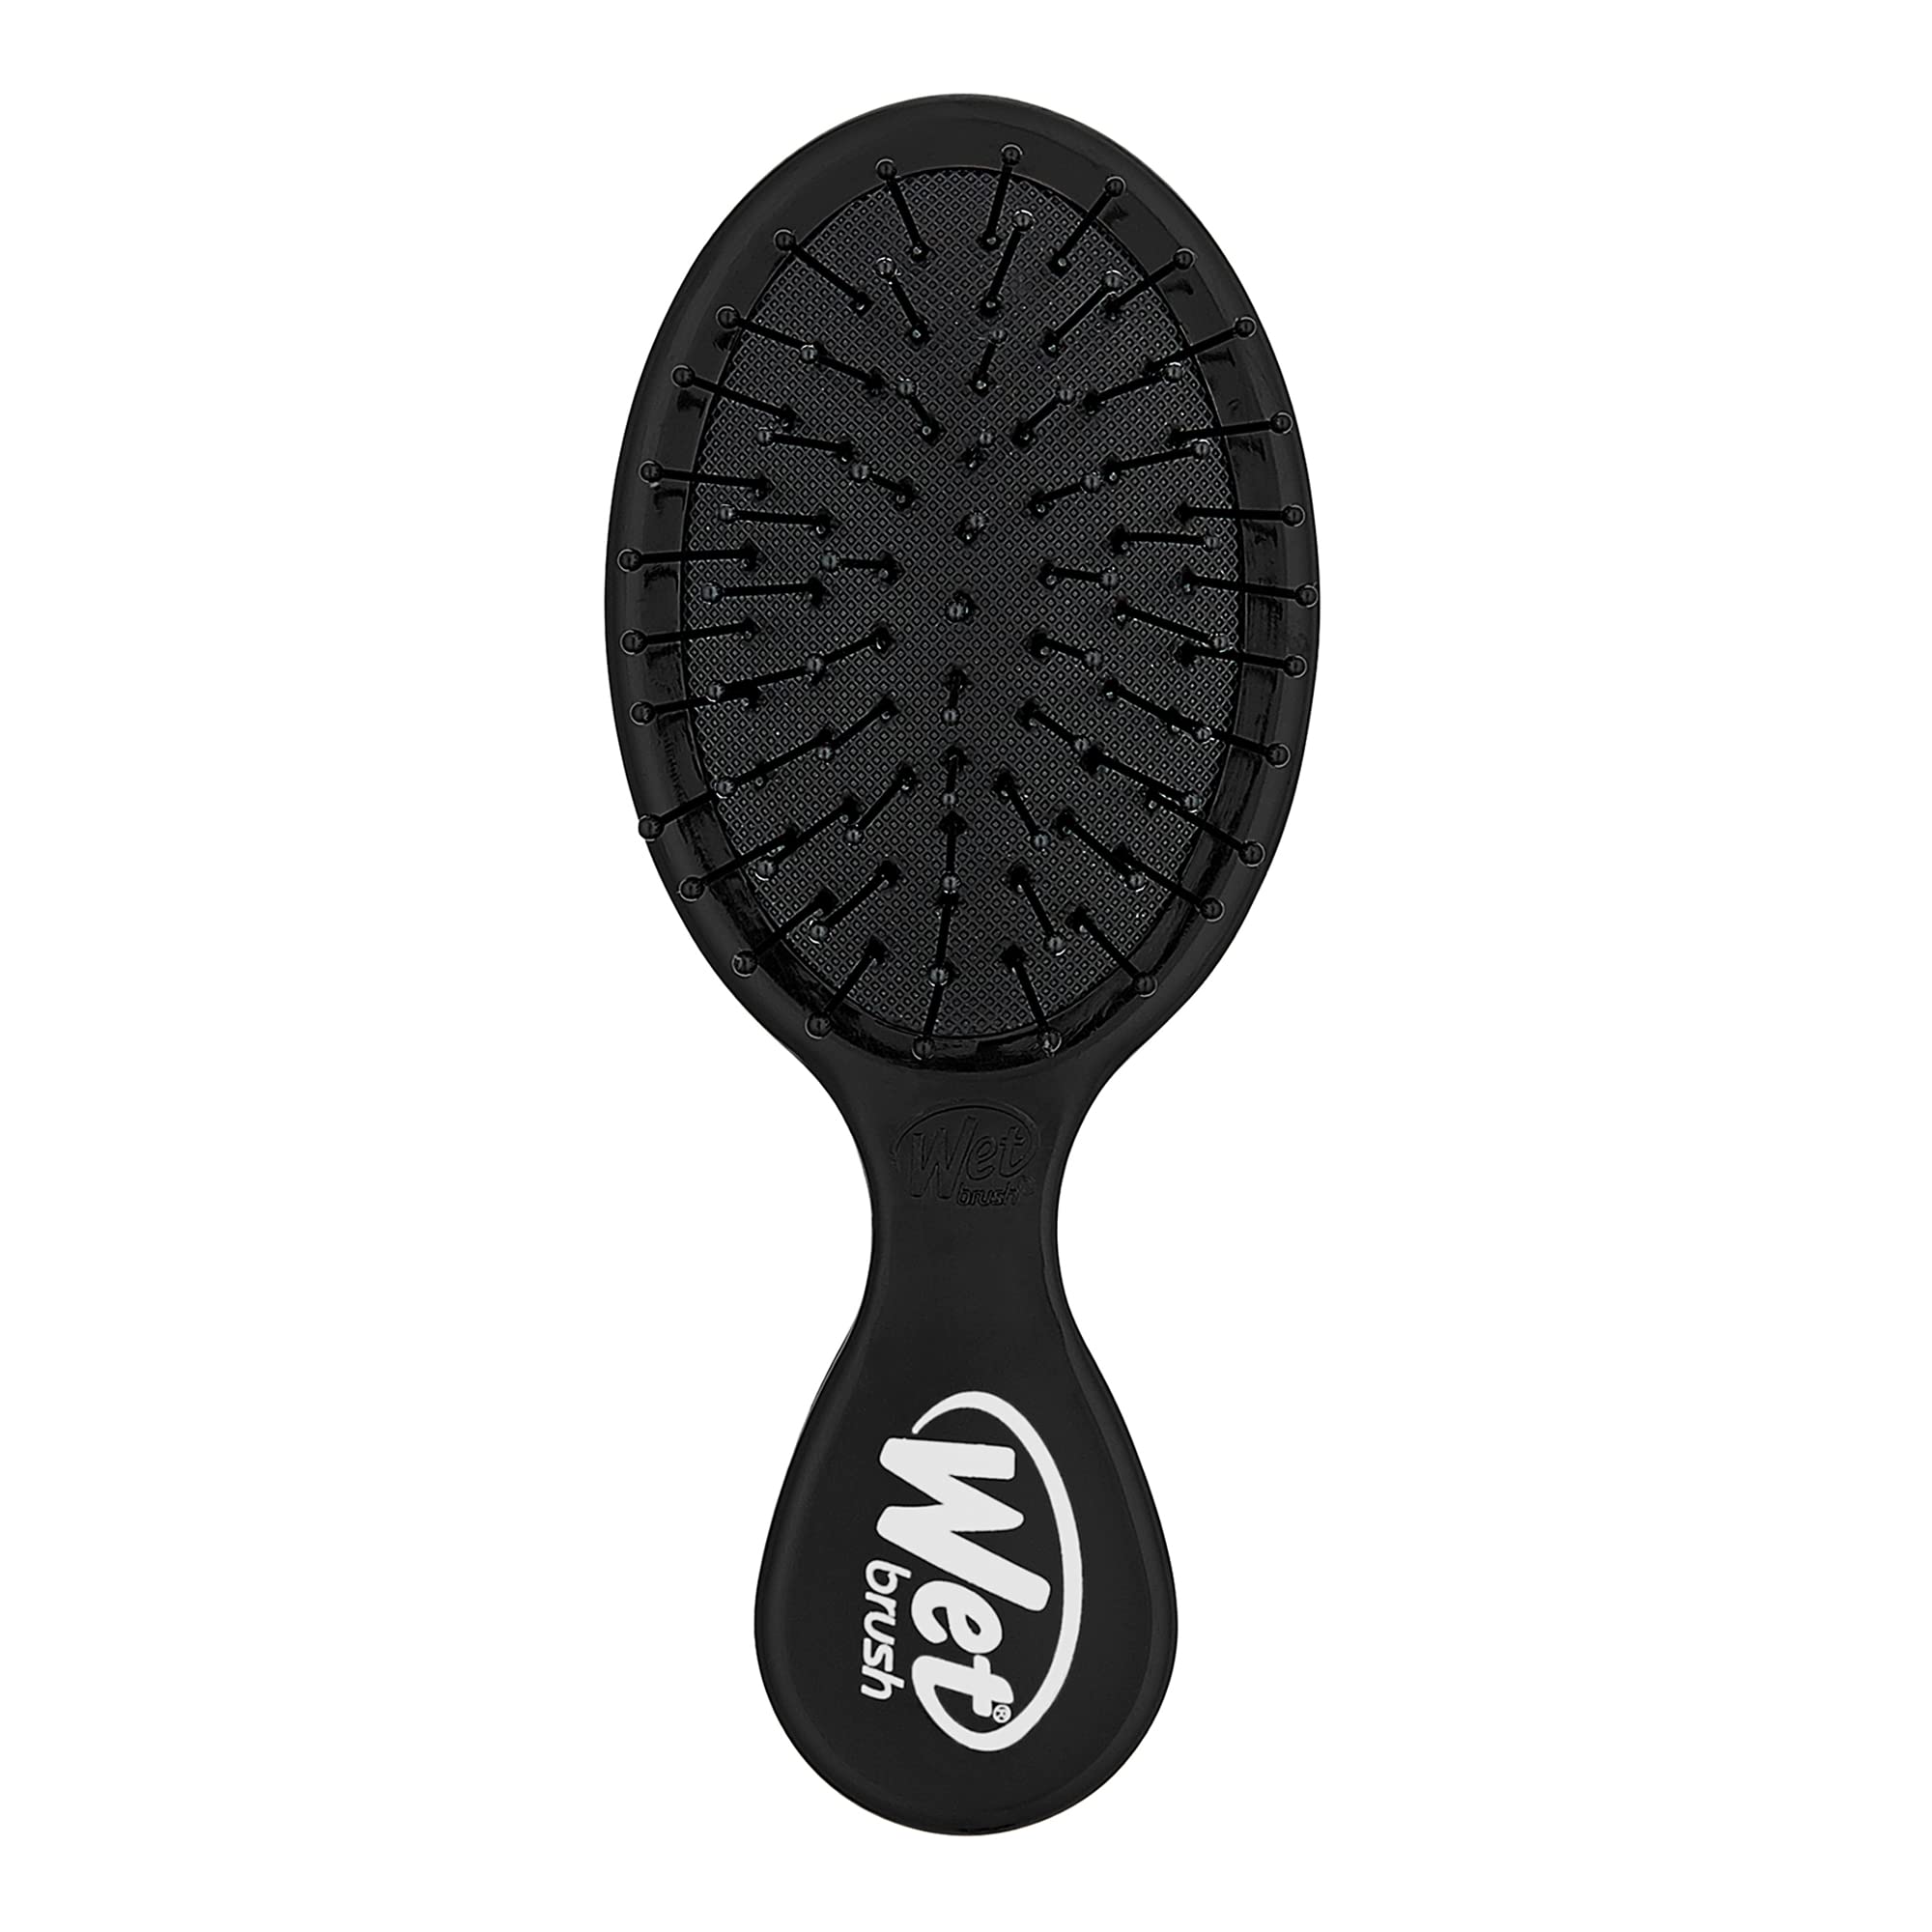 Wet Brush Squirt Detangler Hair Brushes - Black - Mini Detangling Brush with Ultra-Soft IntelliFlex Bristles Glide Through Tangles with Ease - Pain-Free Comb for All Hair Types